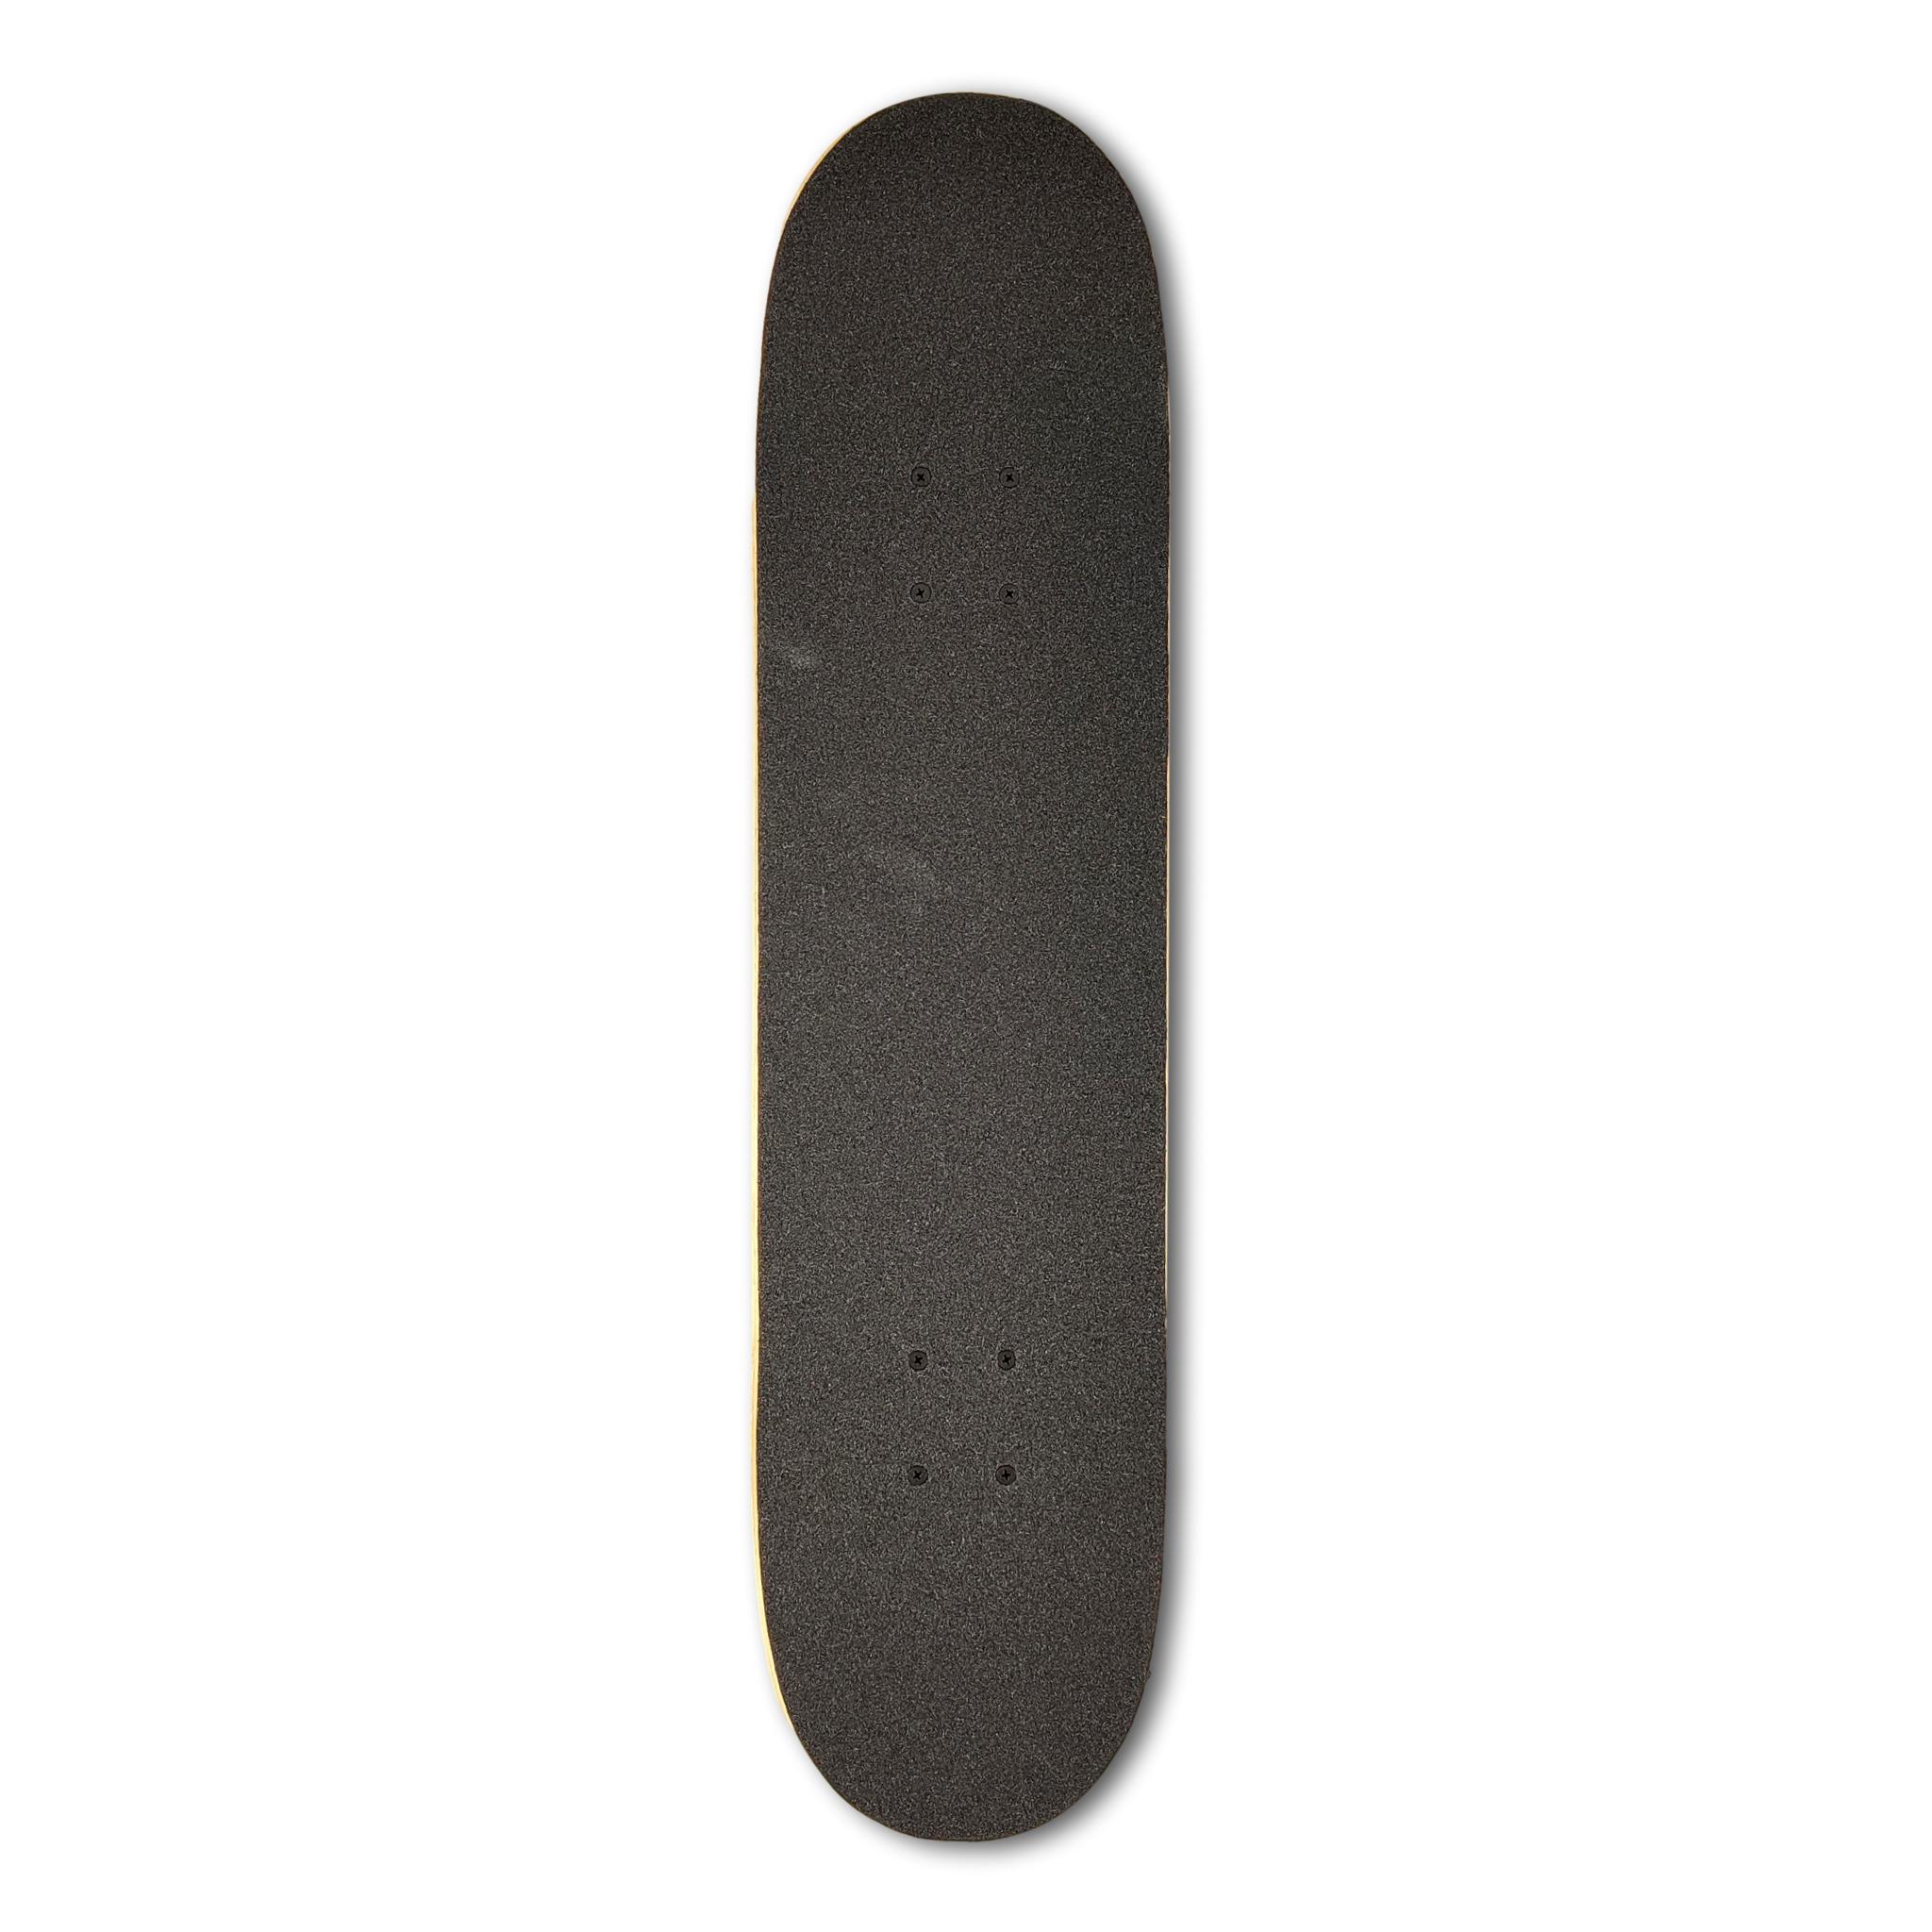 Primitive skateboard Dirty P Colony completo 8.0